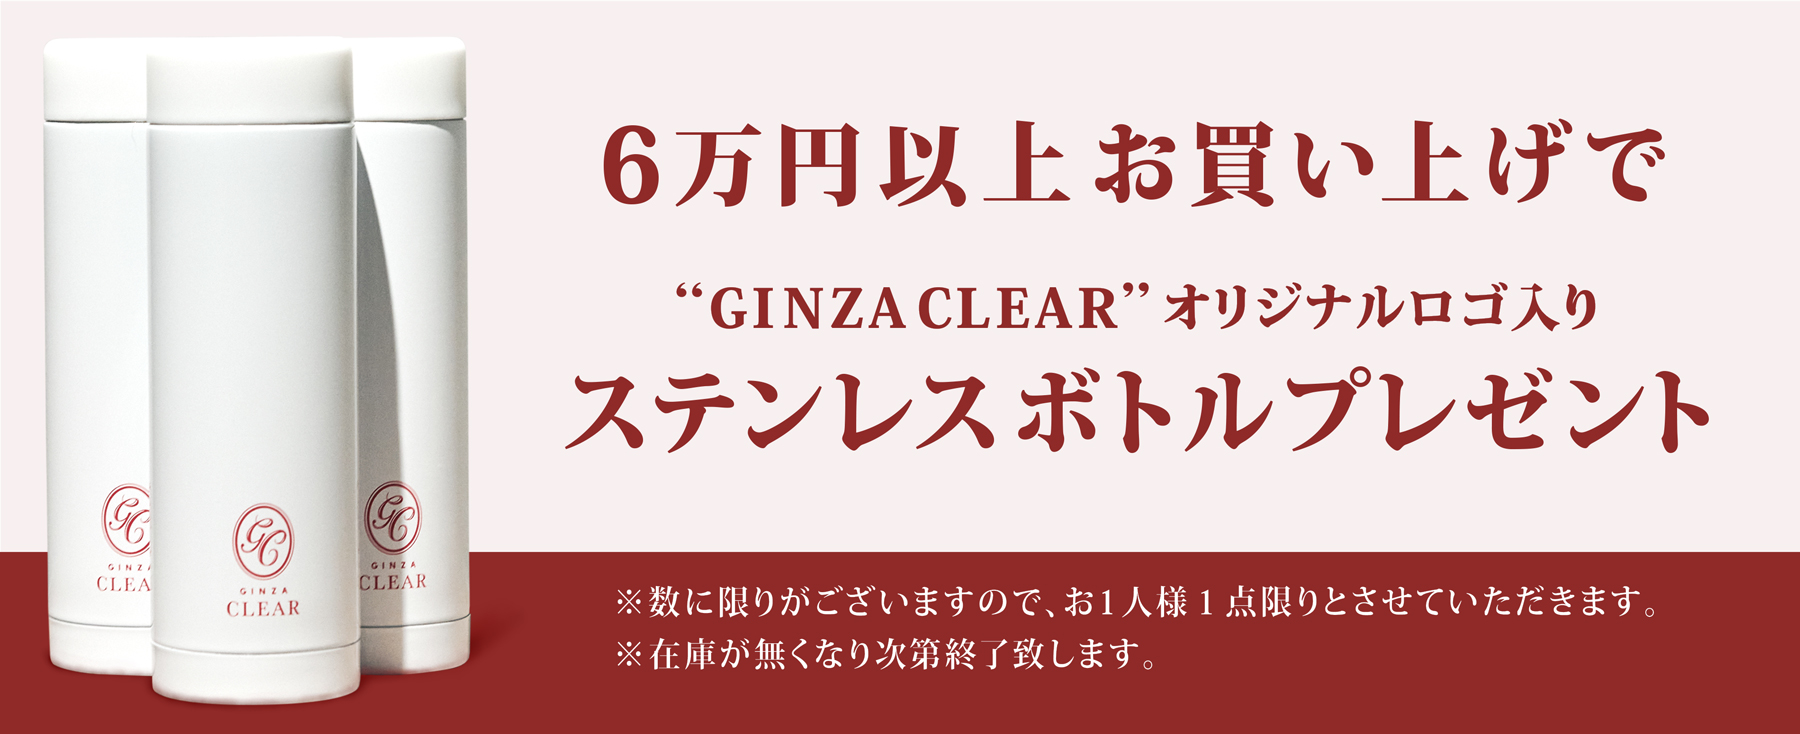 GINZA CLEAR ステンレスボトルプレゼント